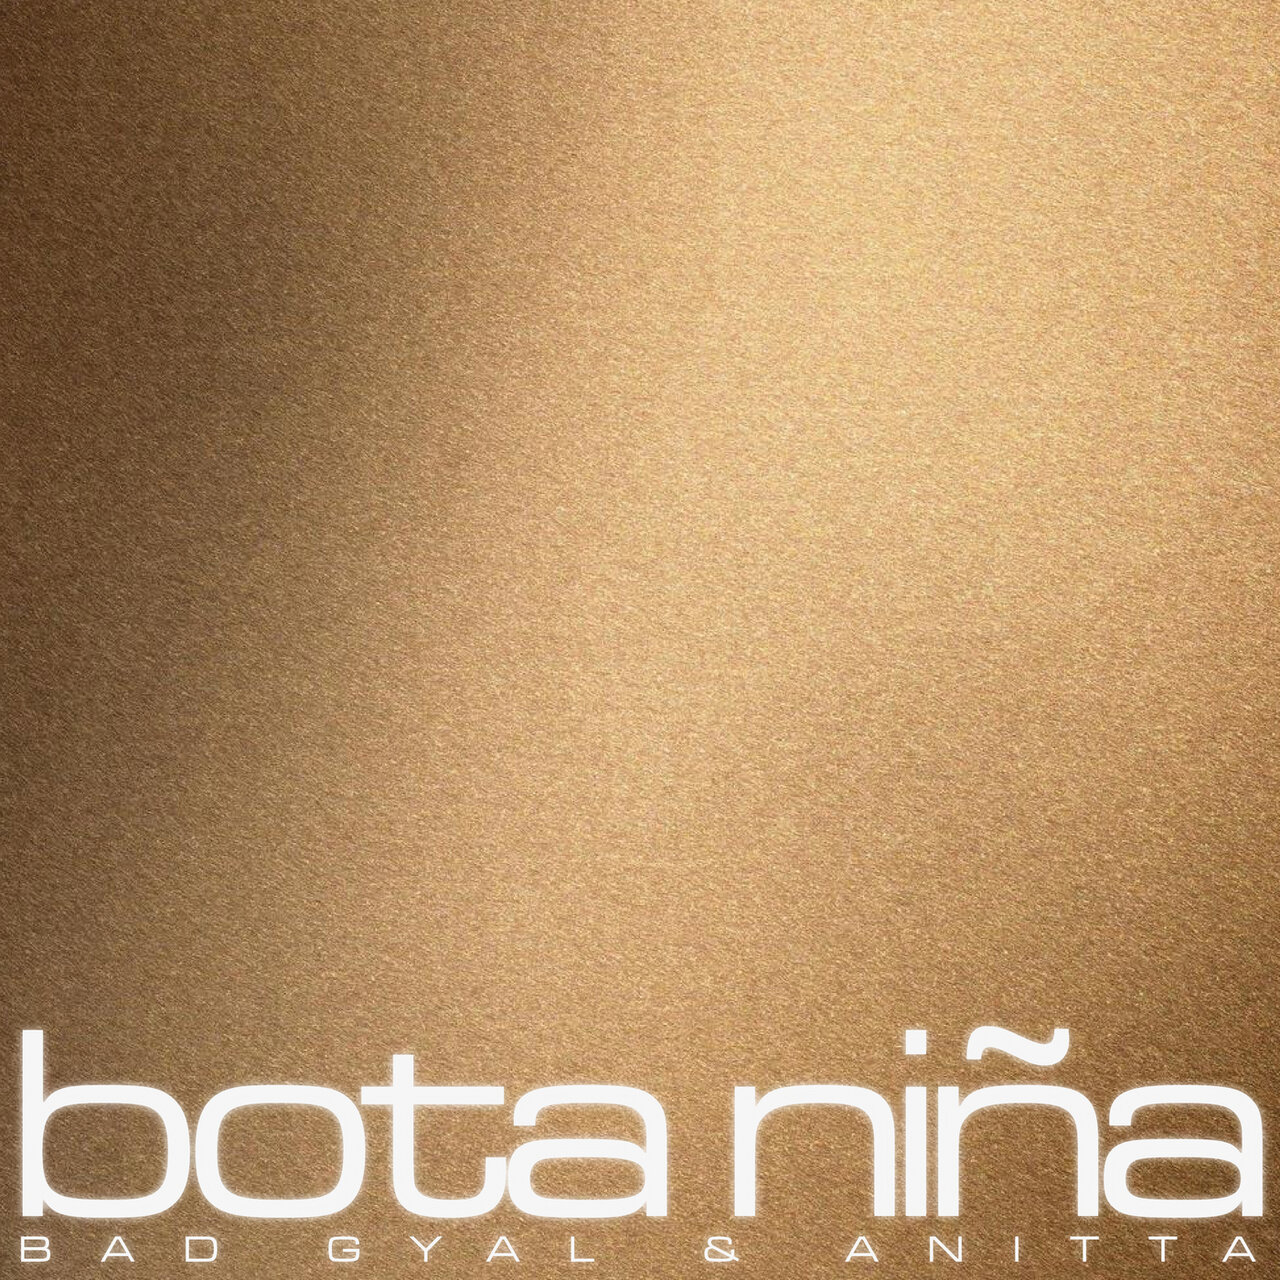 Bad Gyal & Anitta Bota Niña cover artwork